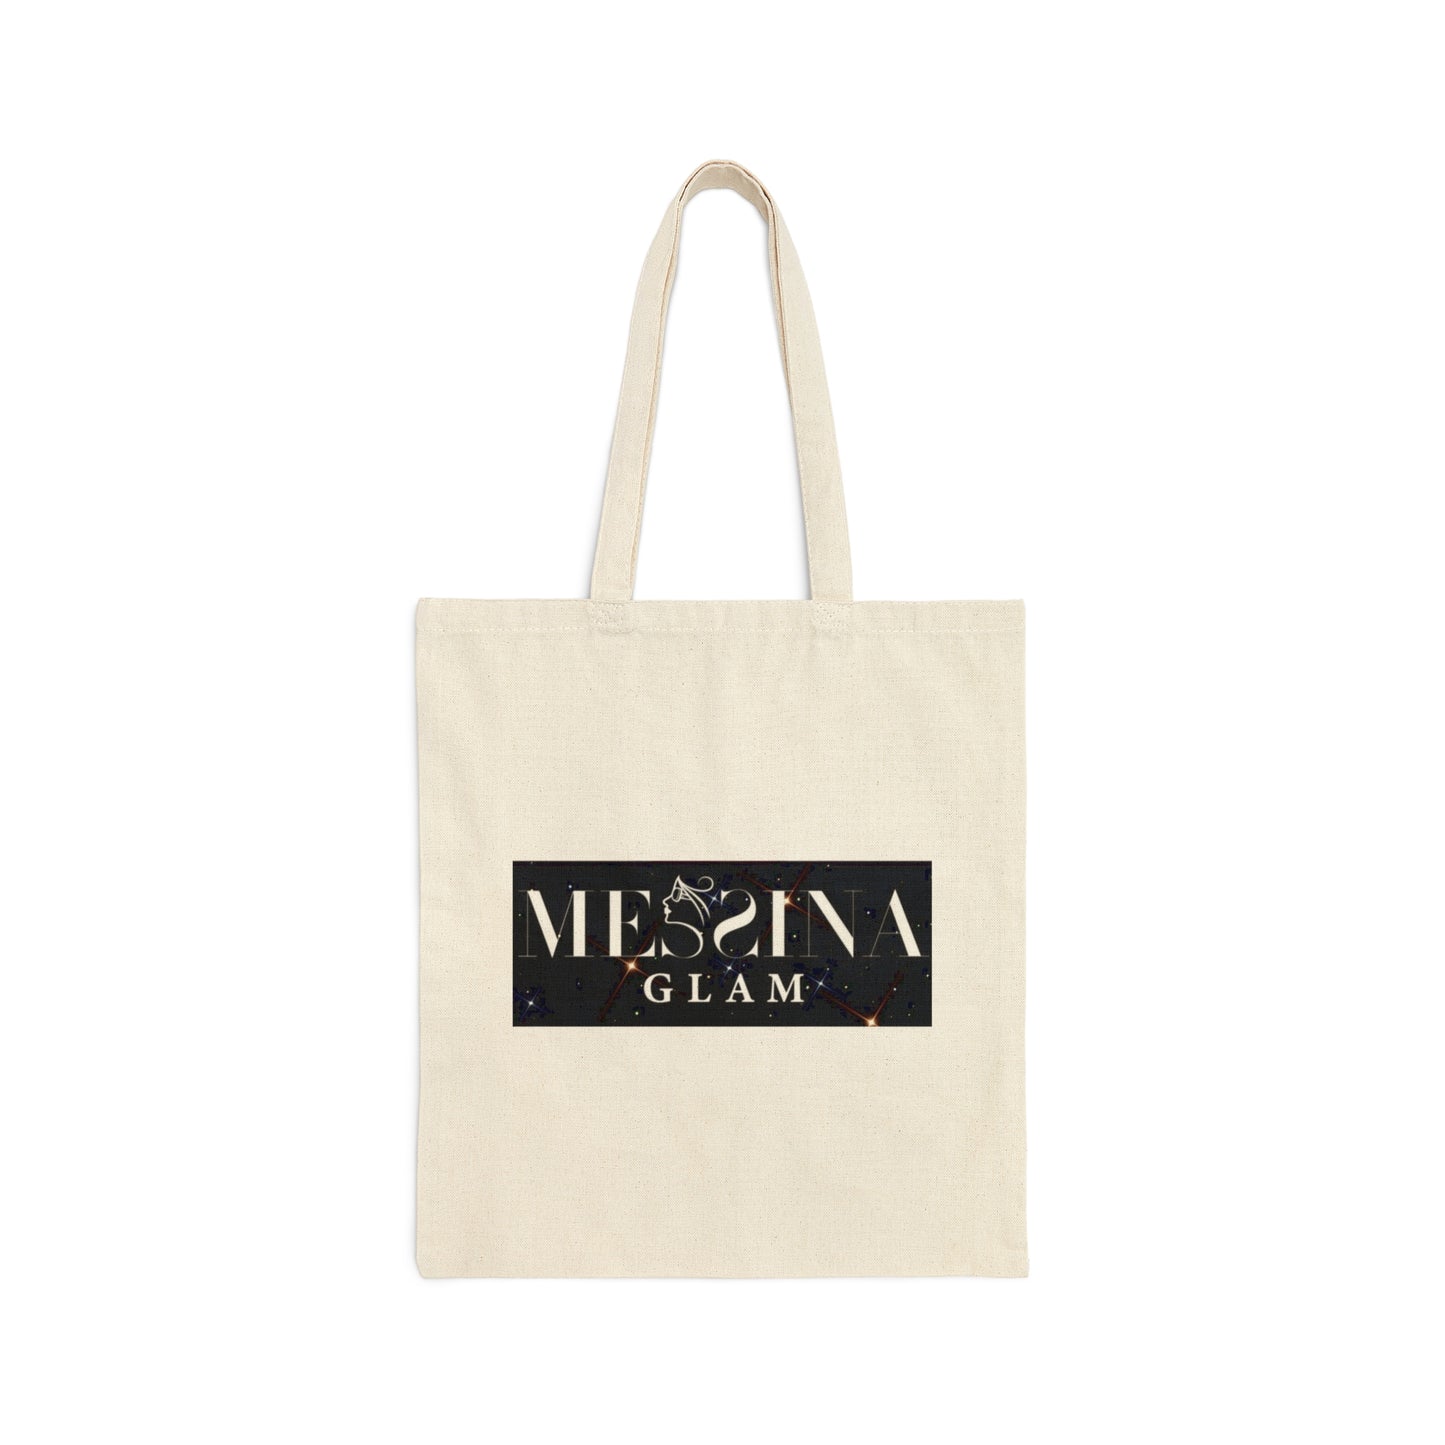 Messina glam Cotton Canvas Tote Bag